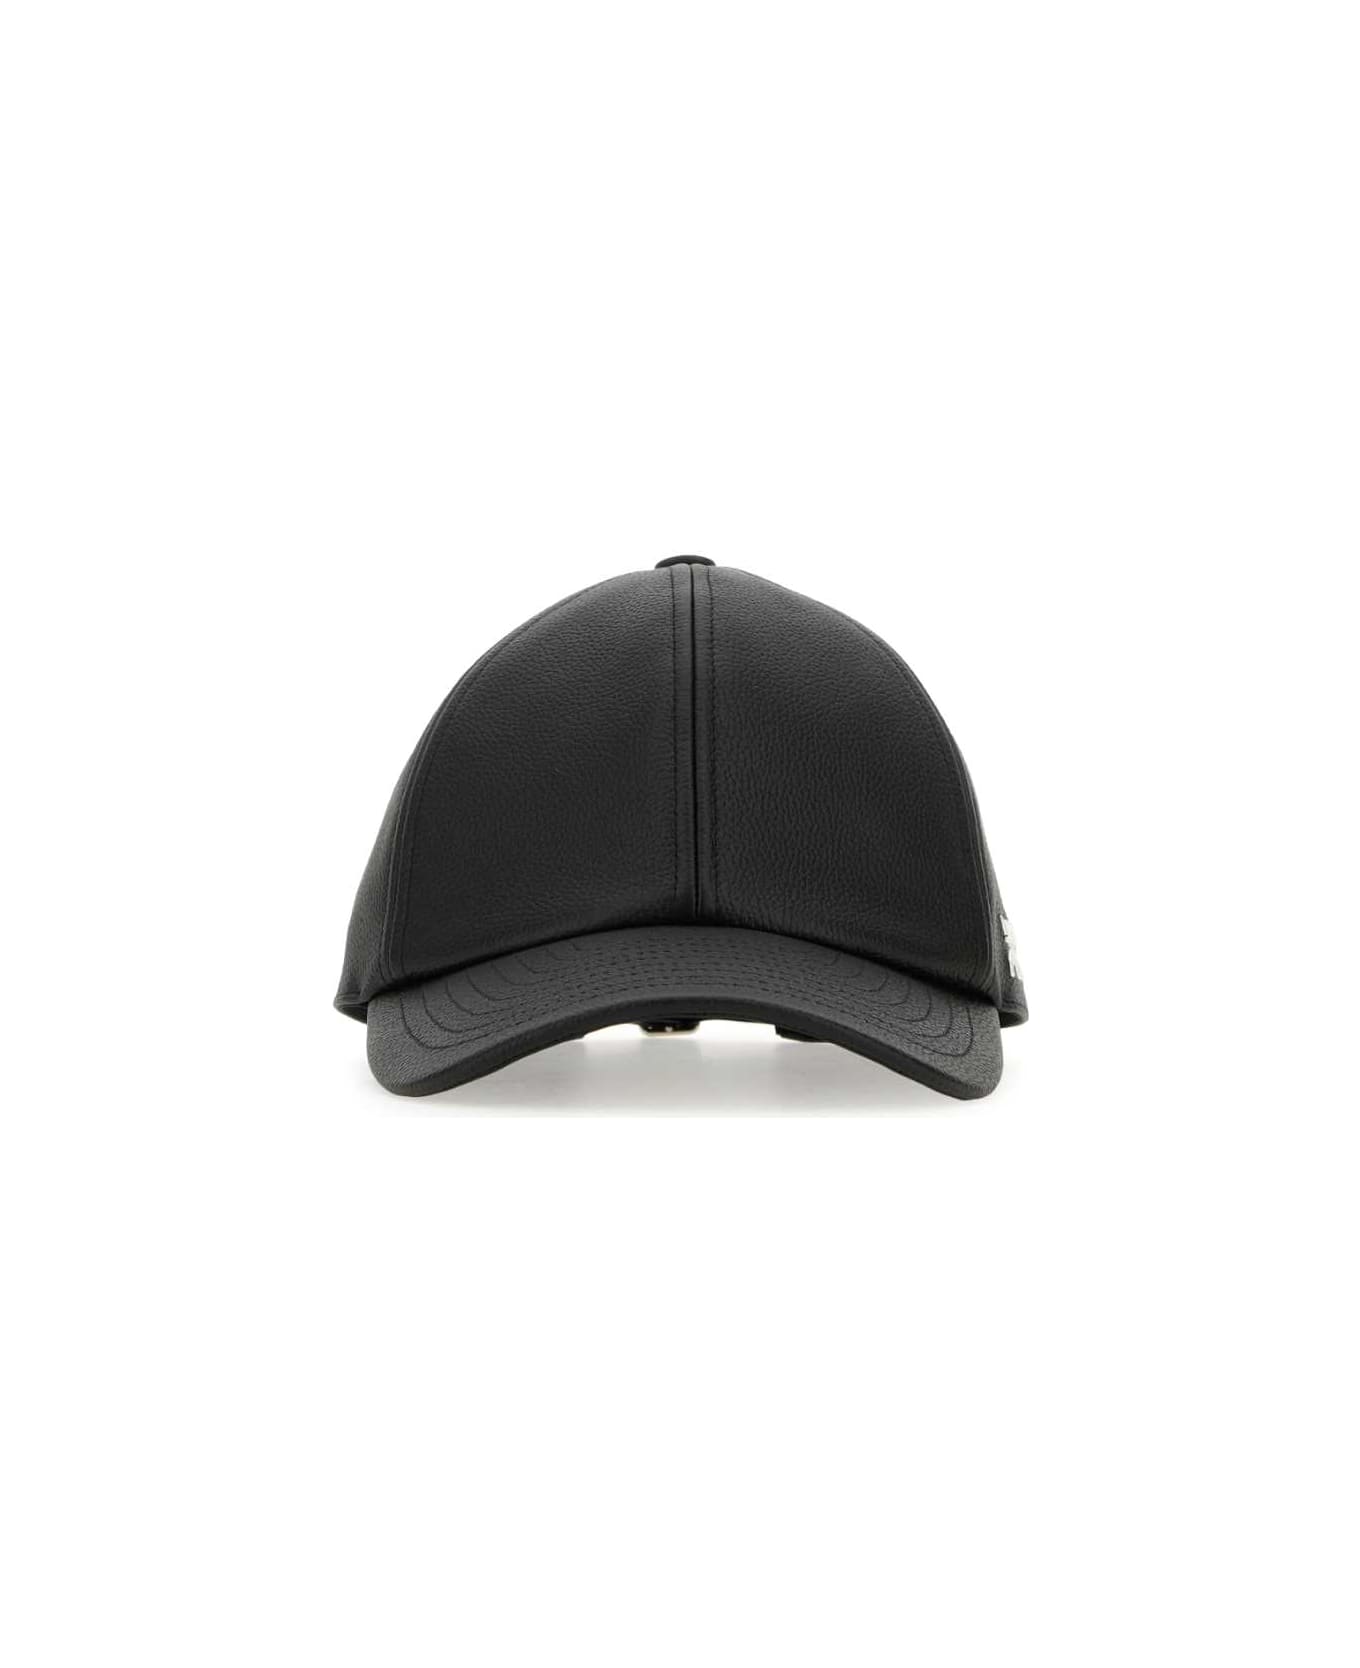 Courrèges Black Leather Baseball Cap - Black